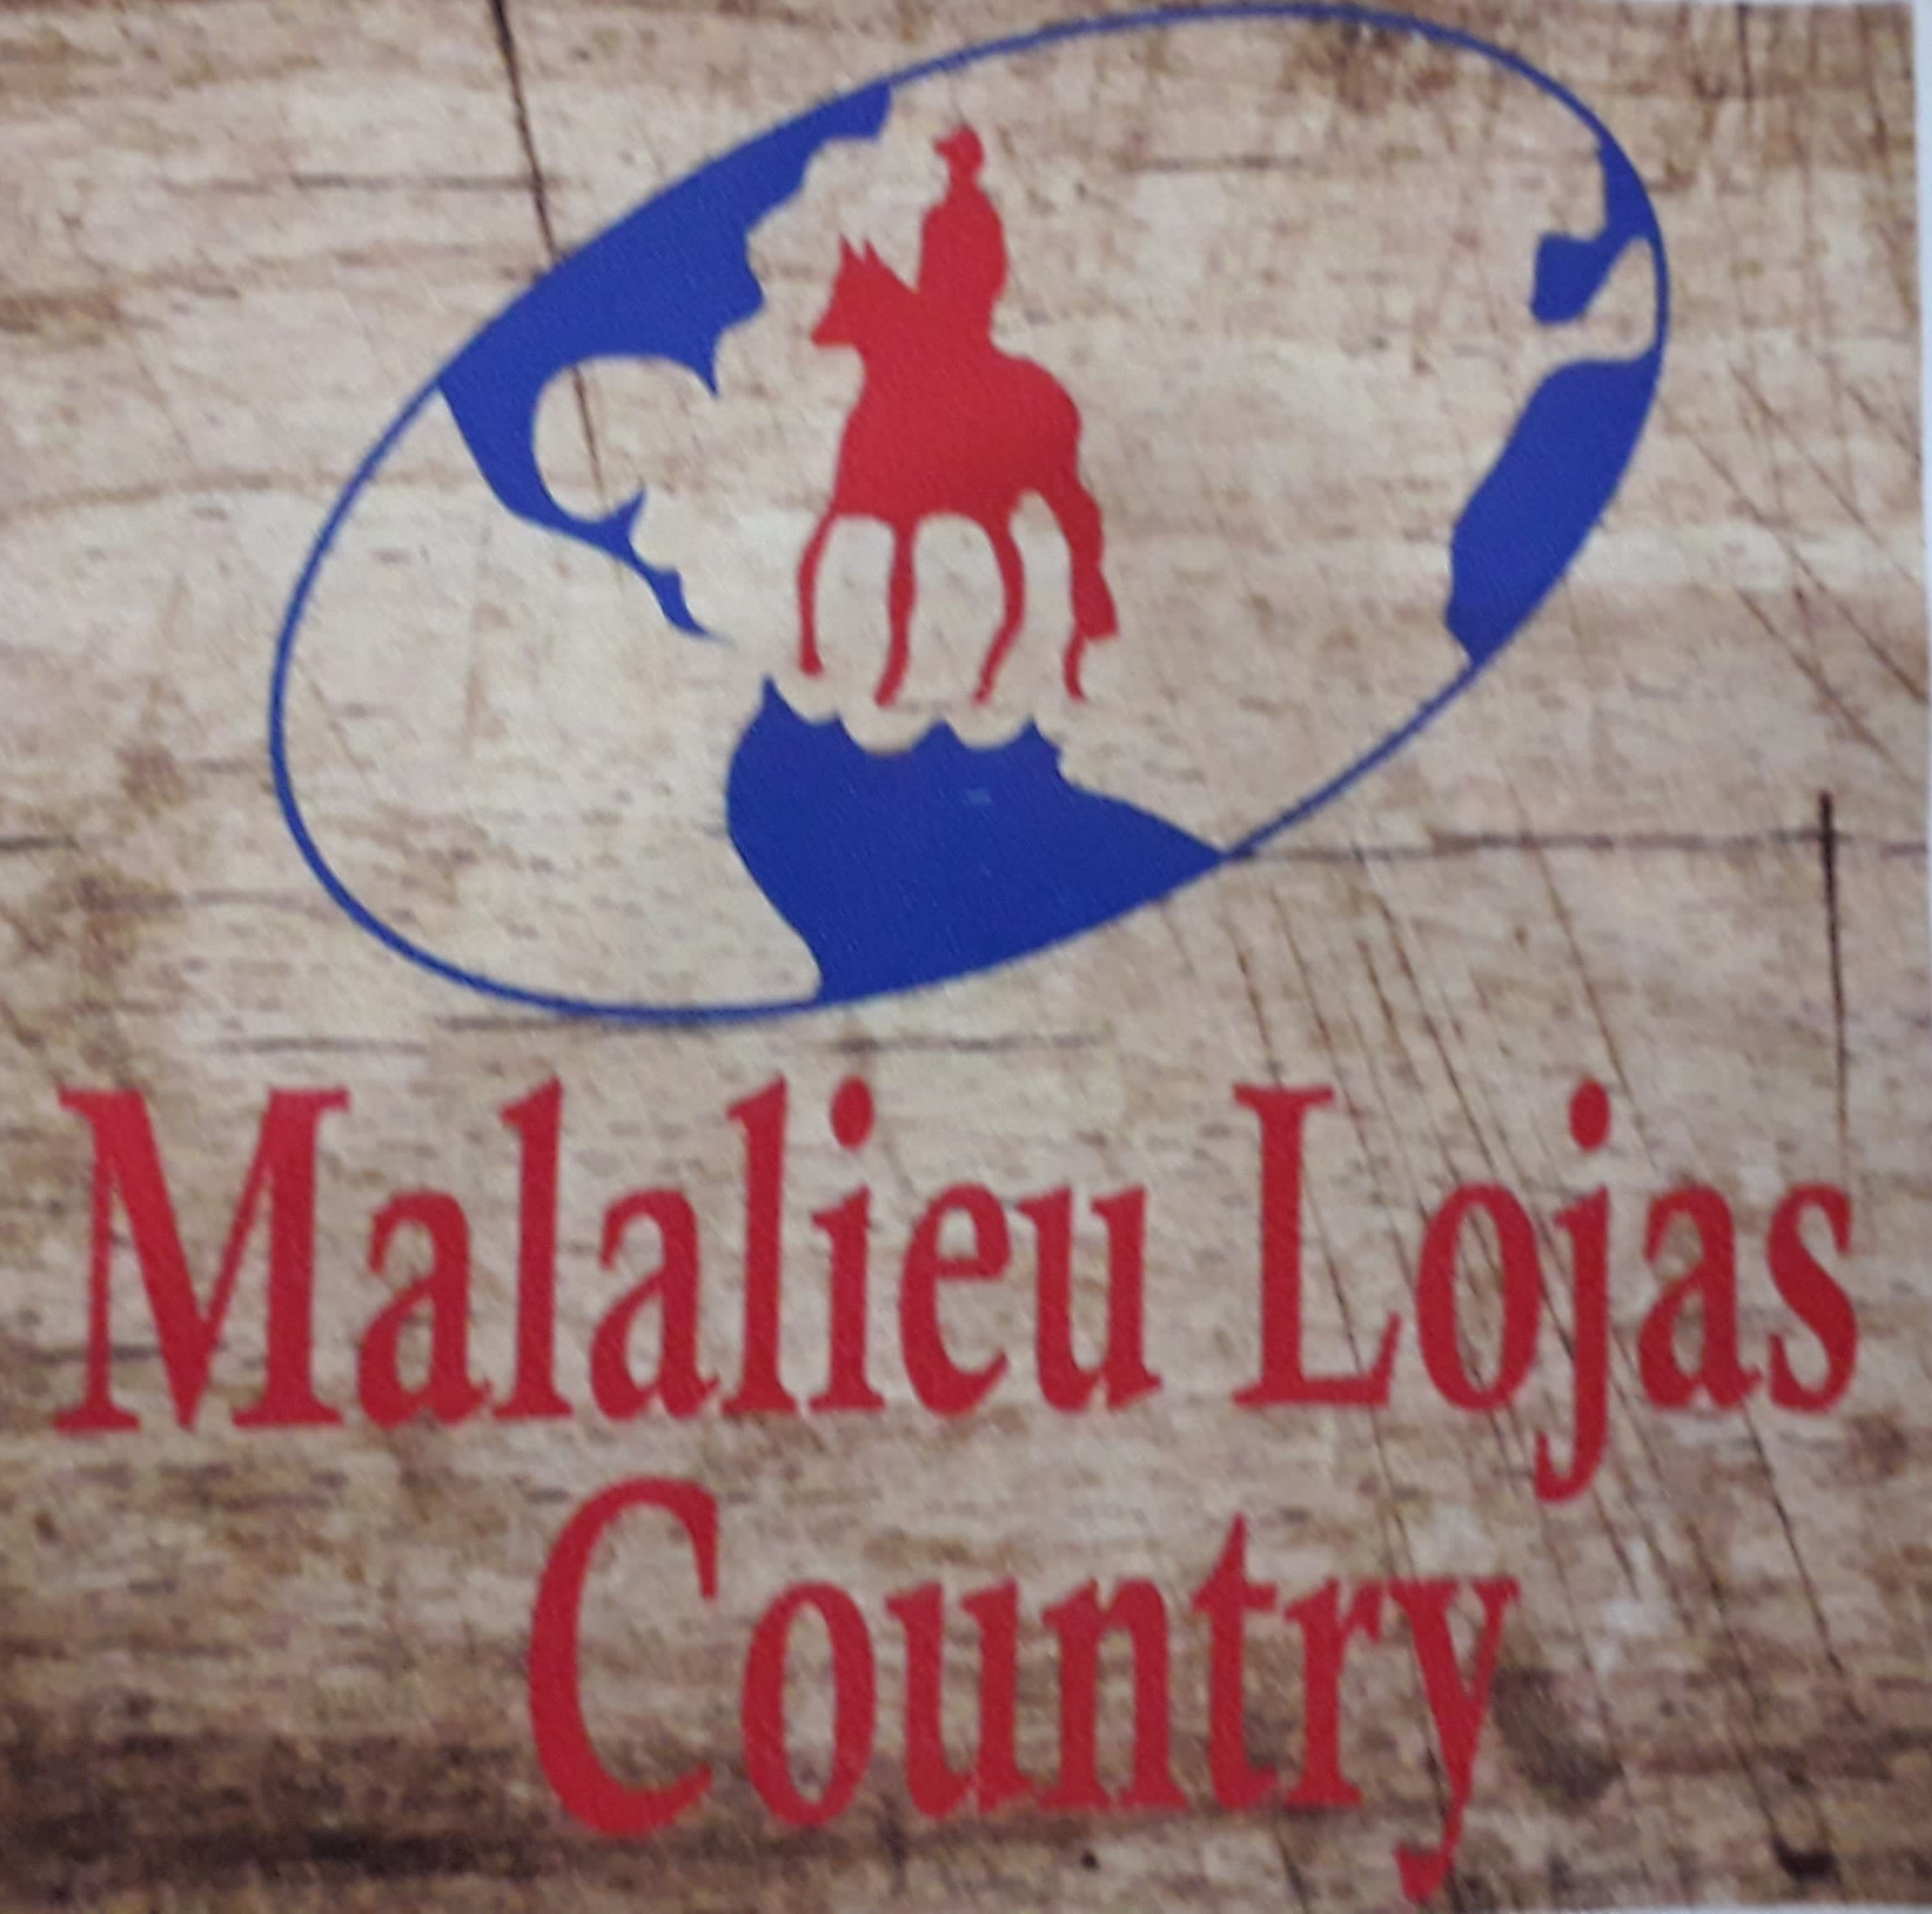 Malalieu Lojas Country